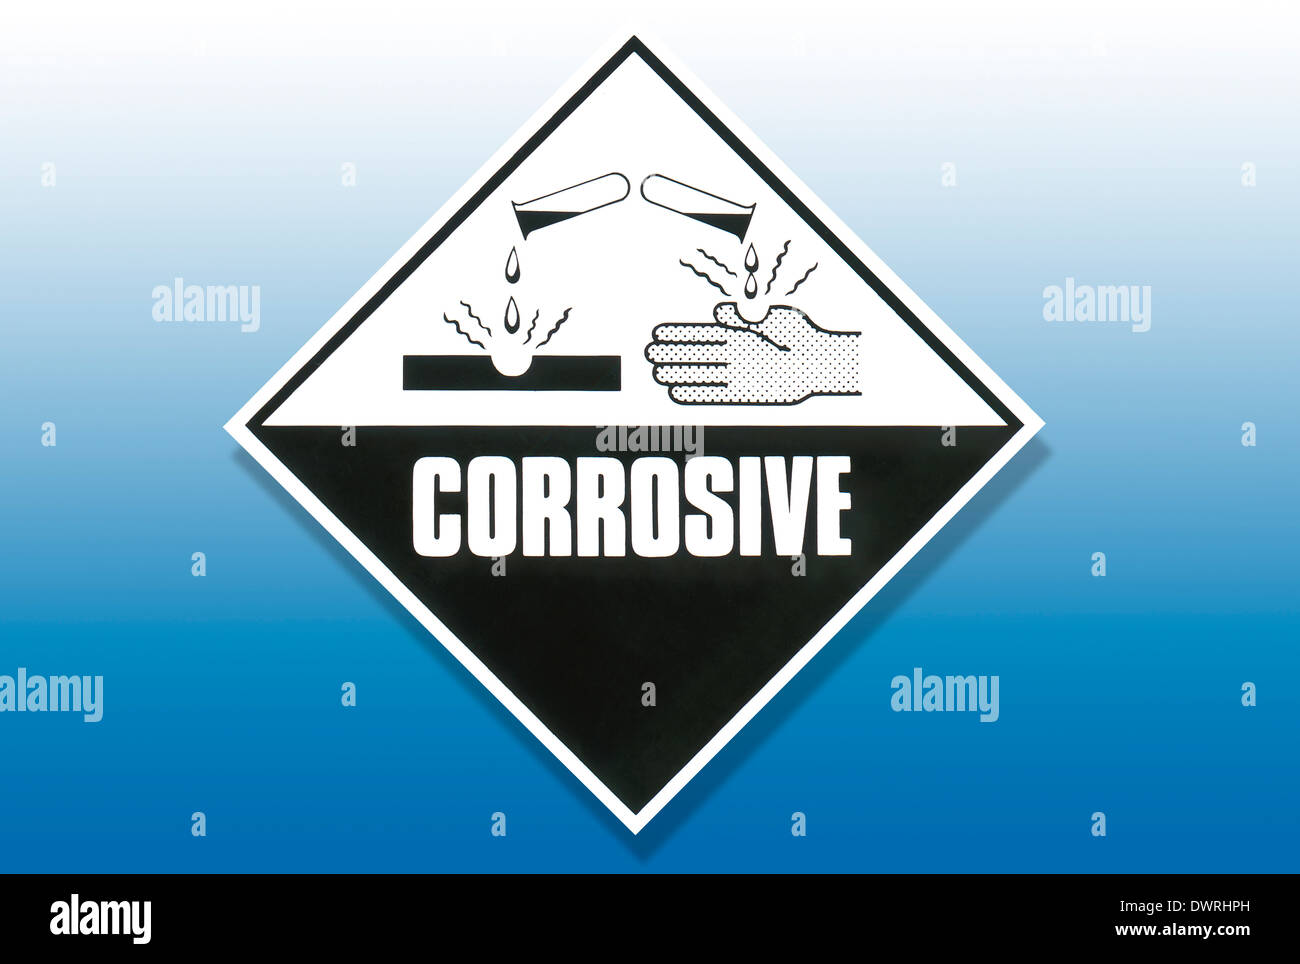 Hazard Warning Sign - Corrosive substances Stock Photo